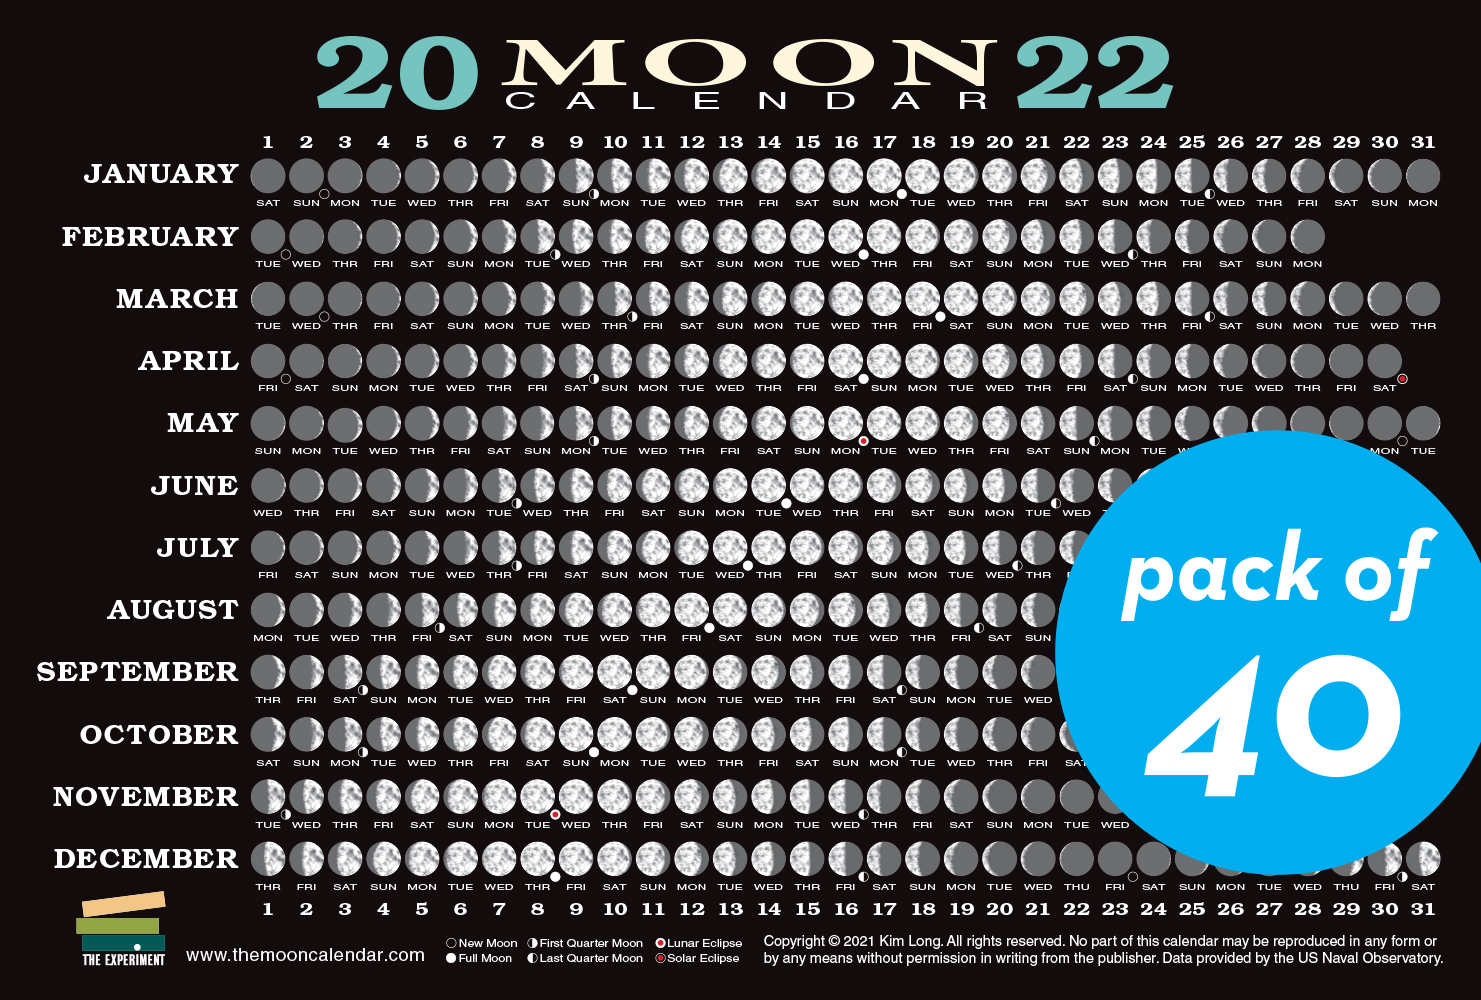 Moon Calendar July 2022 2022 Moon Calendar Card (40 Pack) | The Experiment